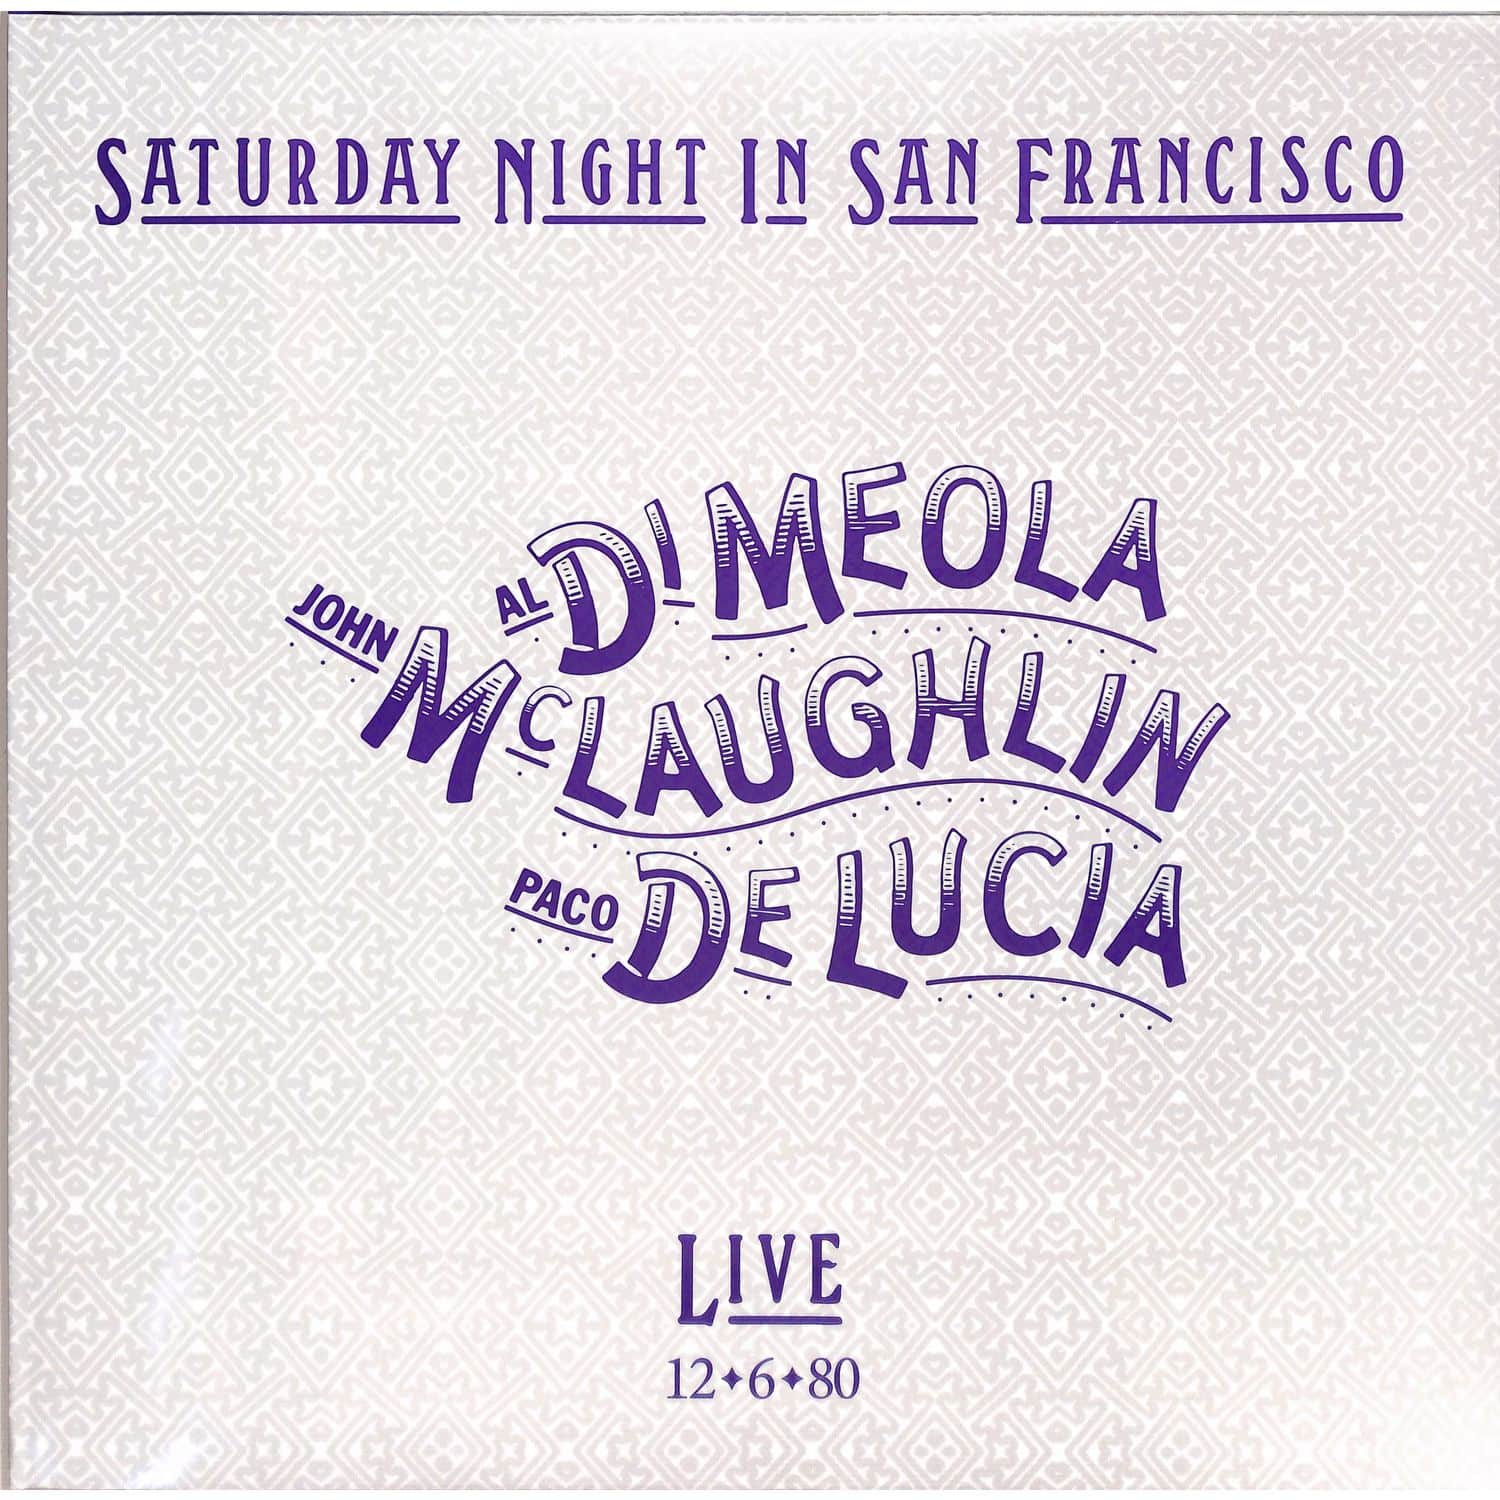 Al Di Meola / John McLaughlin / Paco De Lucia - SATURDAY NIGHT IN SAN FRANCISCO 